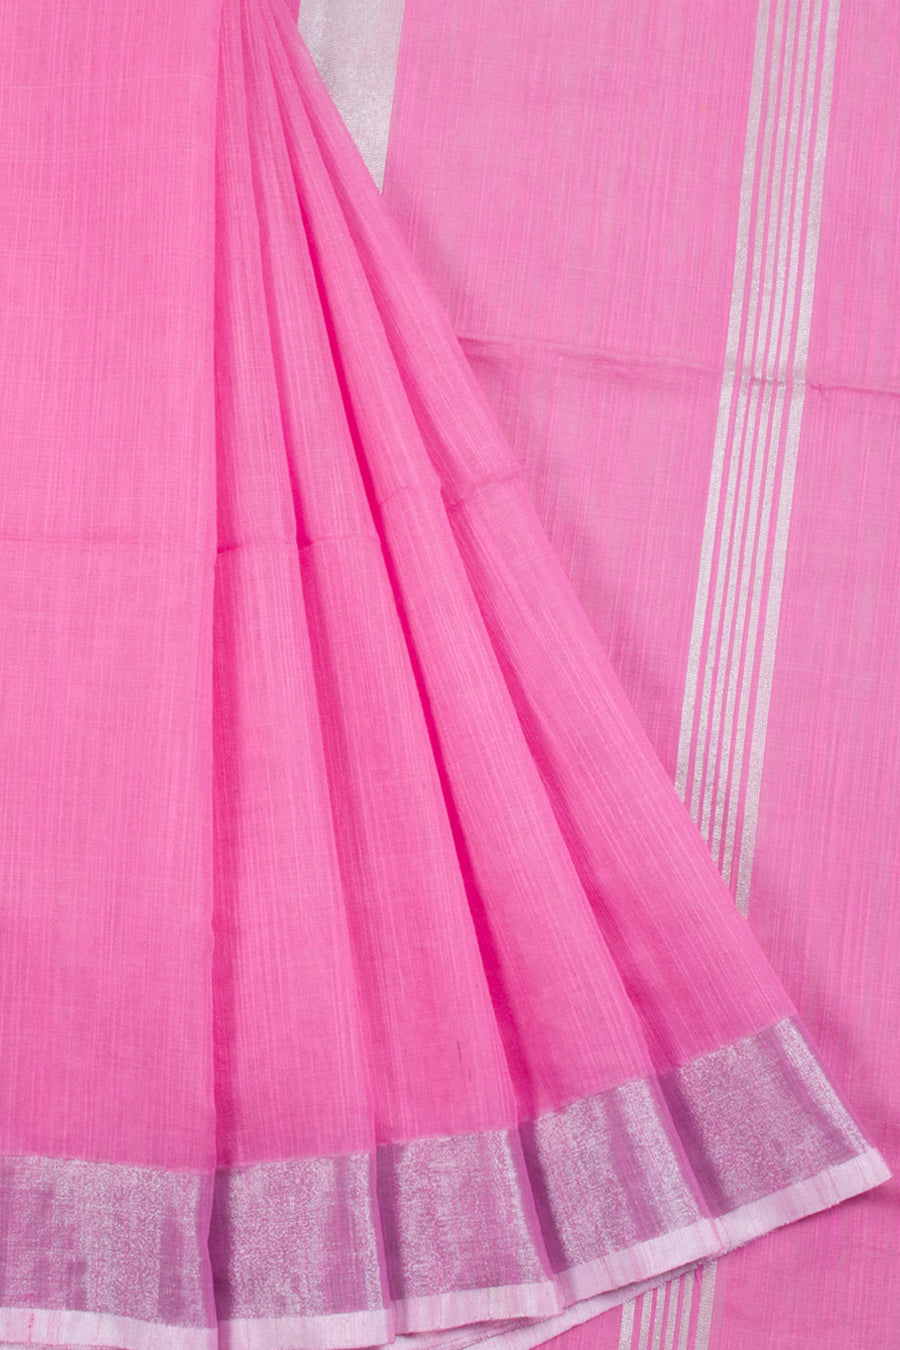 Handloom Bengal Cotton Saree with Silver Zari Border 